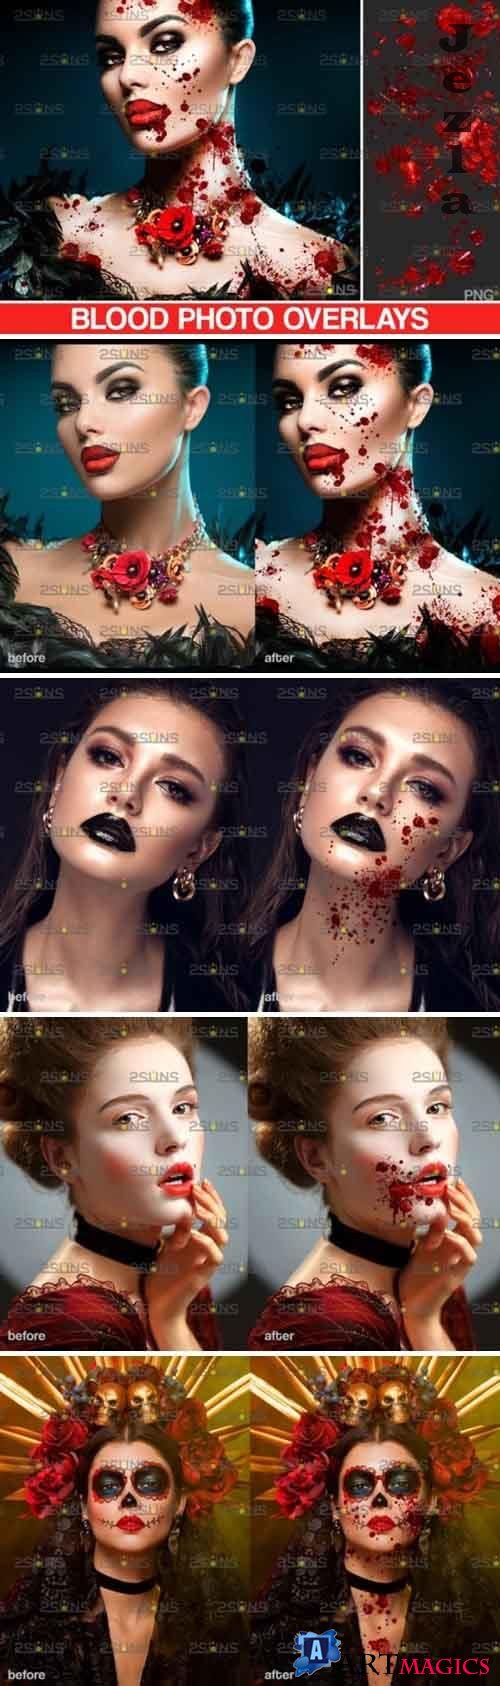 Blood splatter photoshop overlay, Halloween png overlays  - 840469